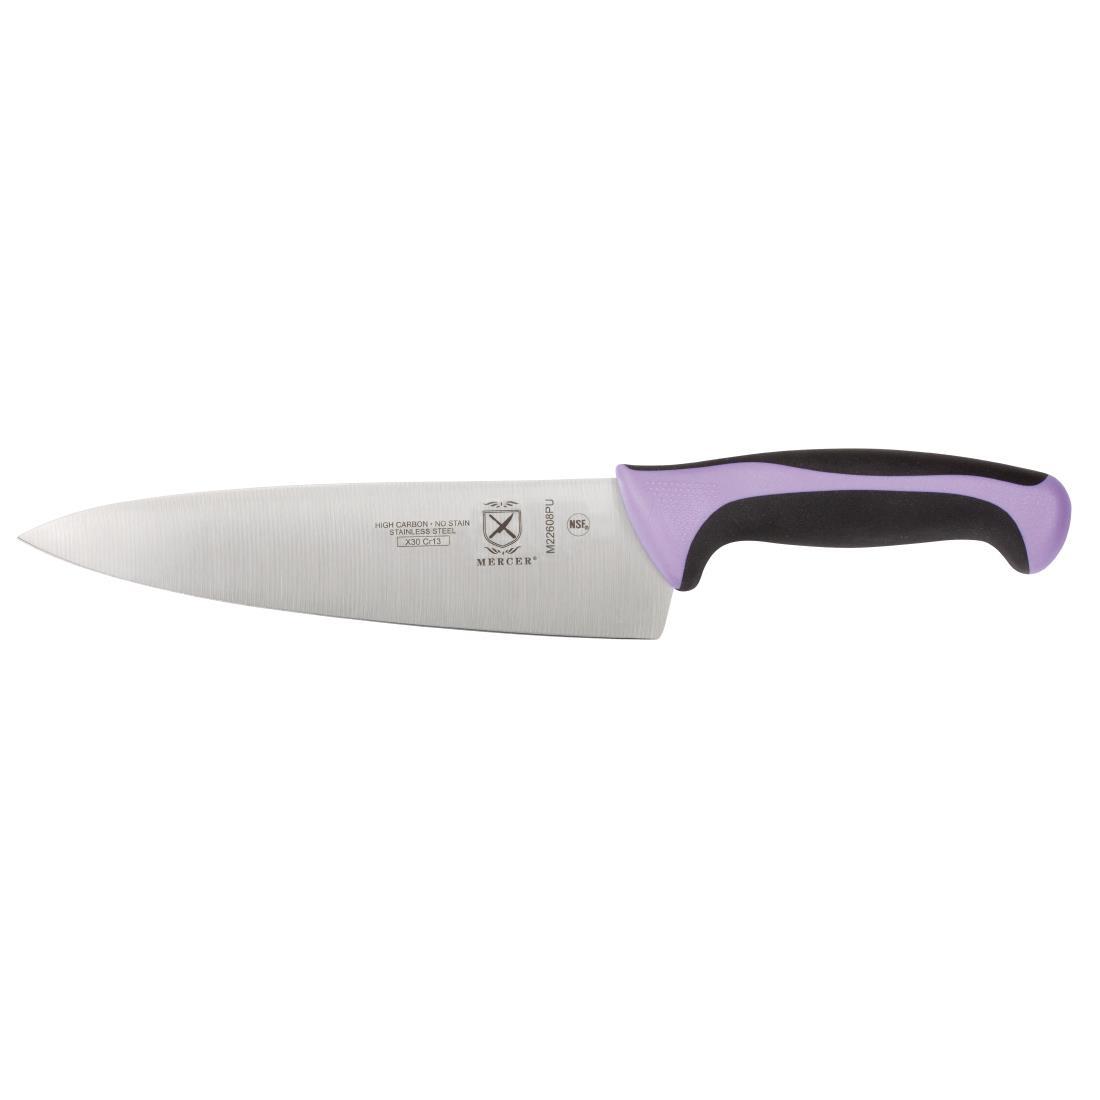 Mercer Culinary Allergen Safety Chefs Knife 20cm - FB501  - 1